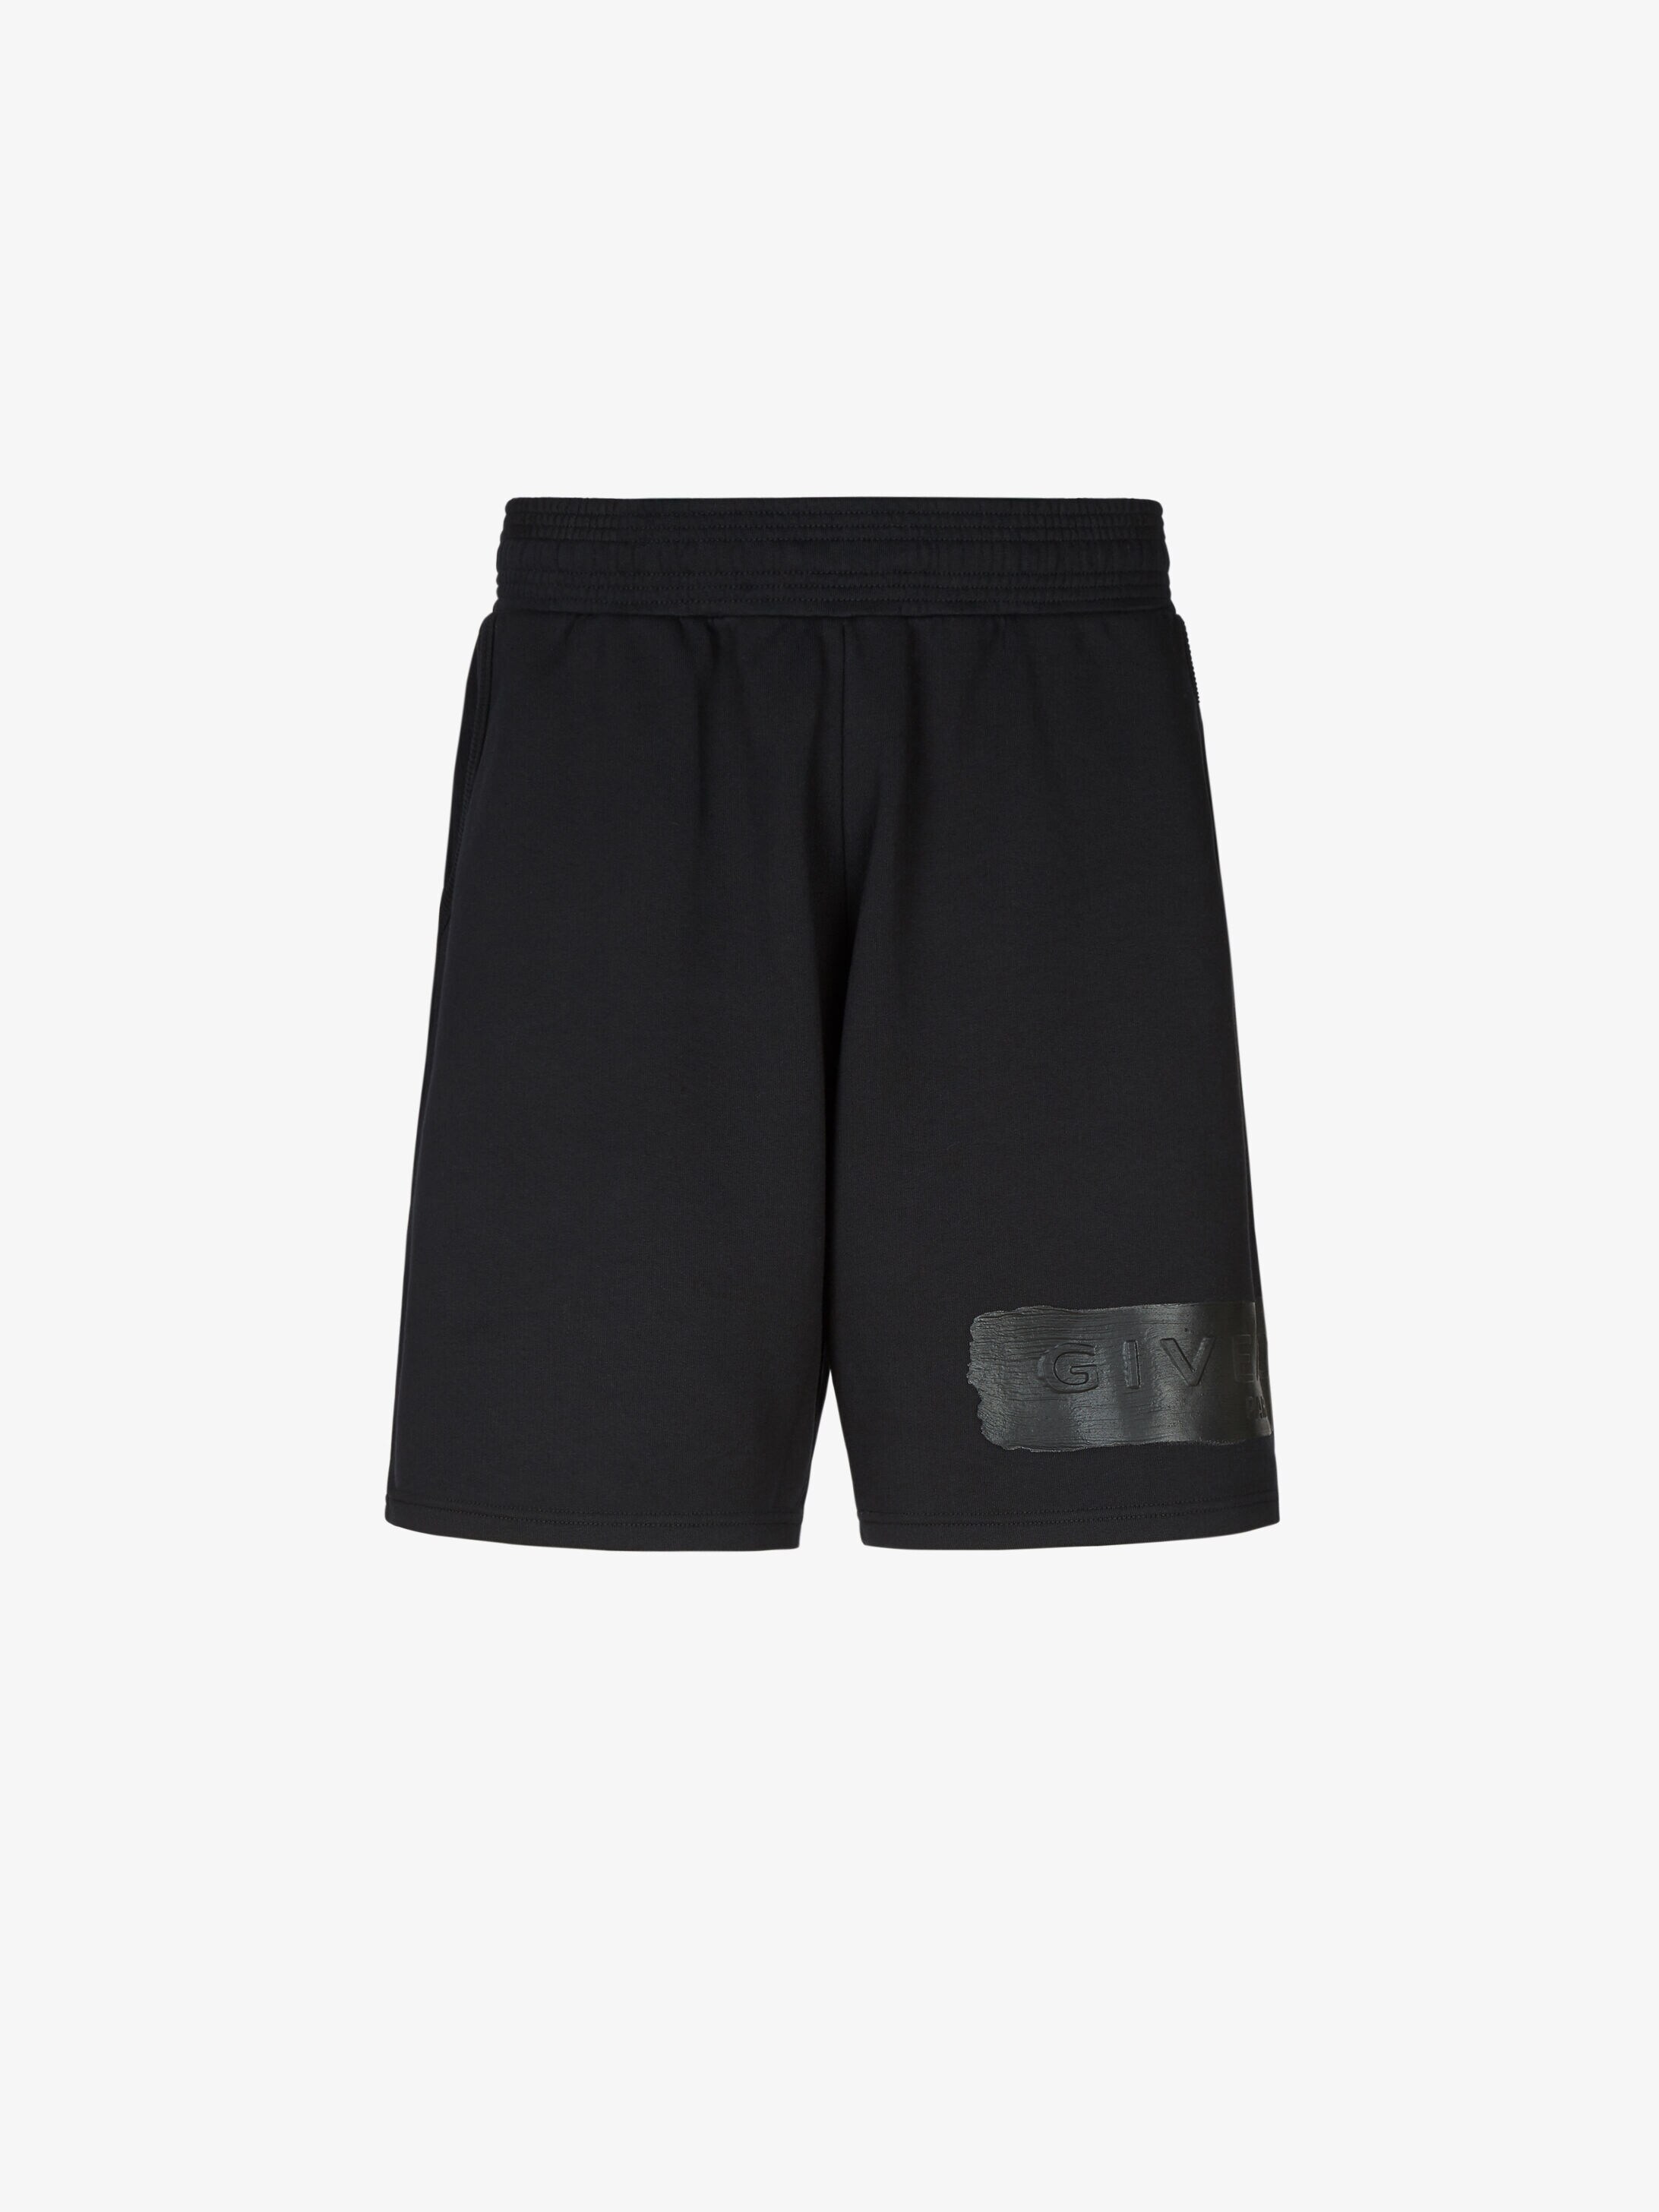 givenchy shorts price